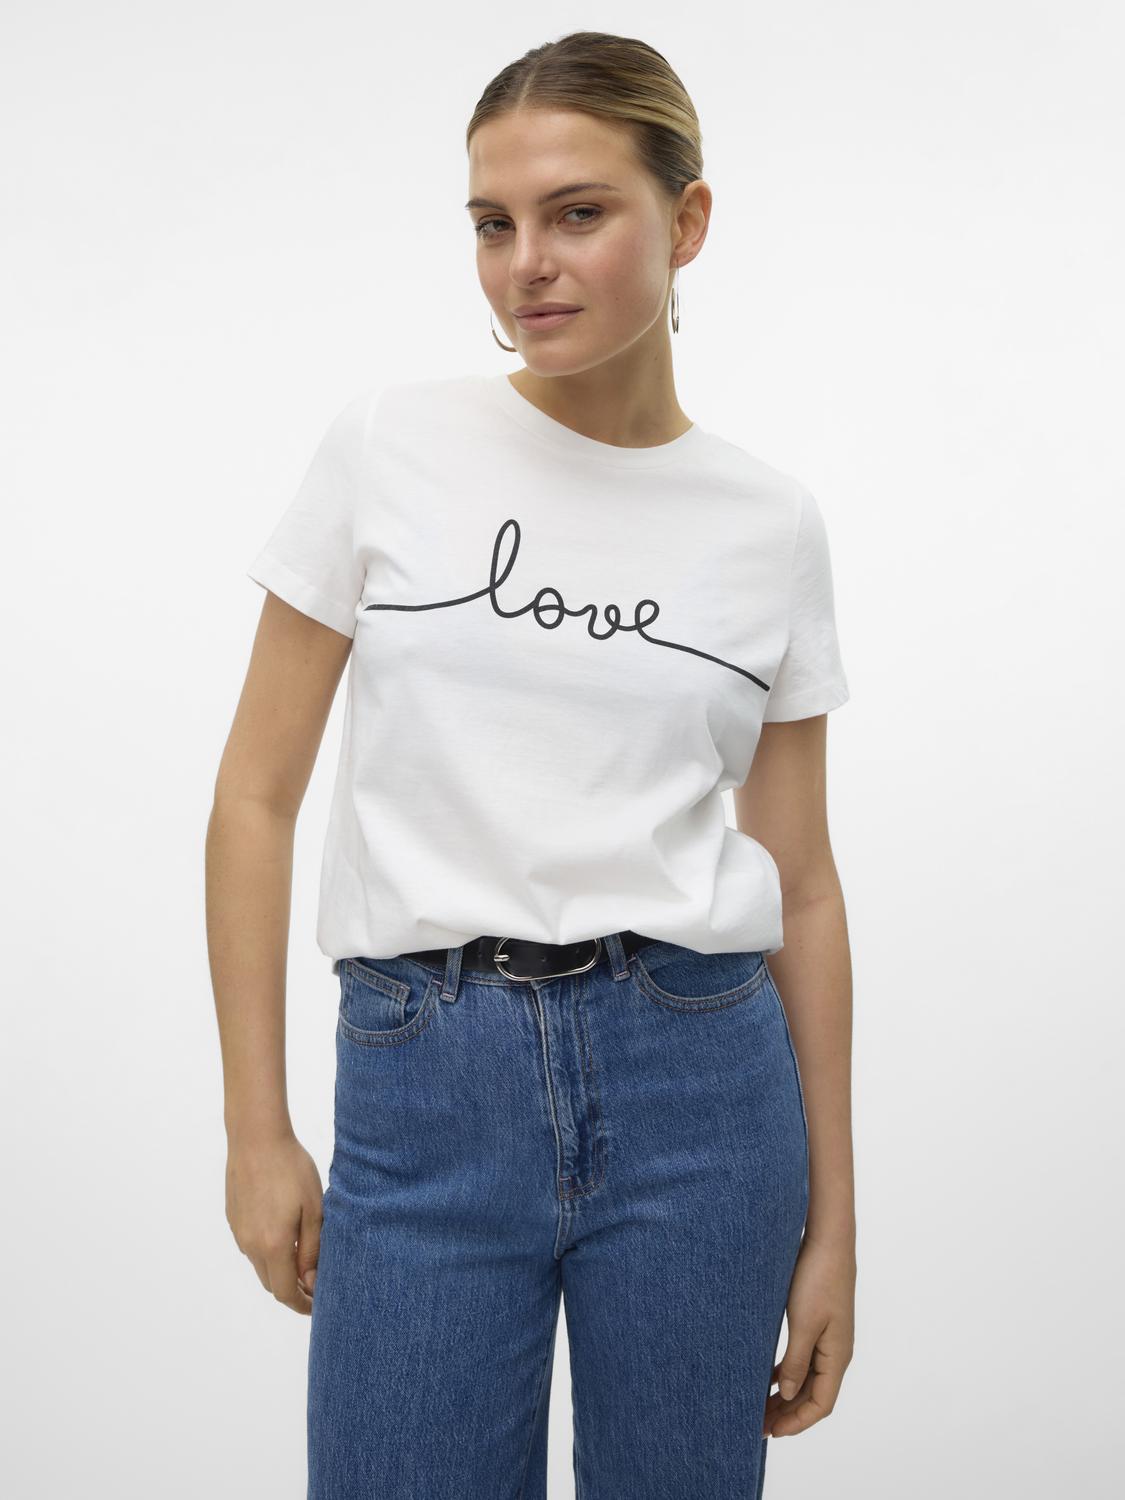 Vero Moda "Love" T-Shirt in White